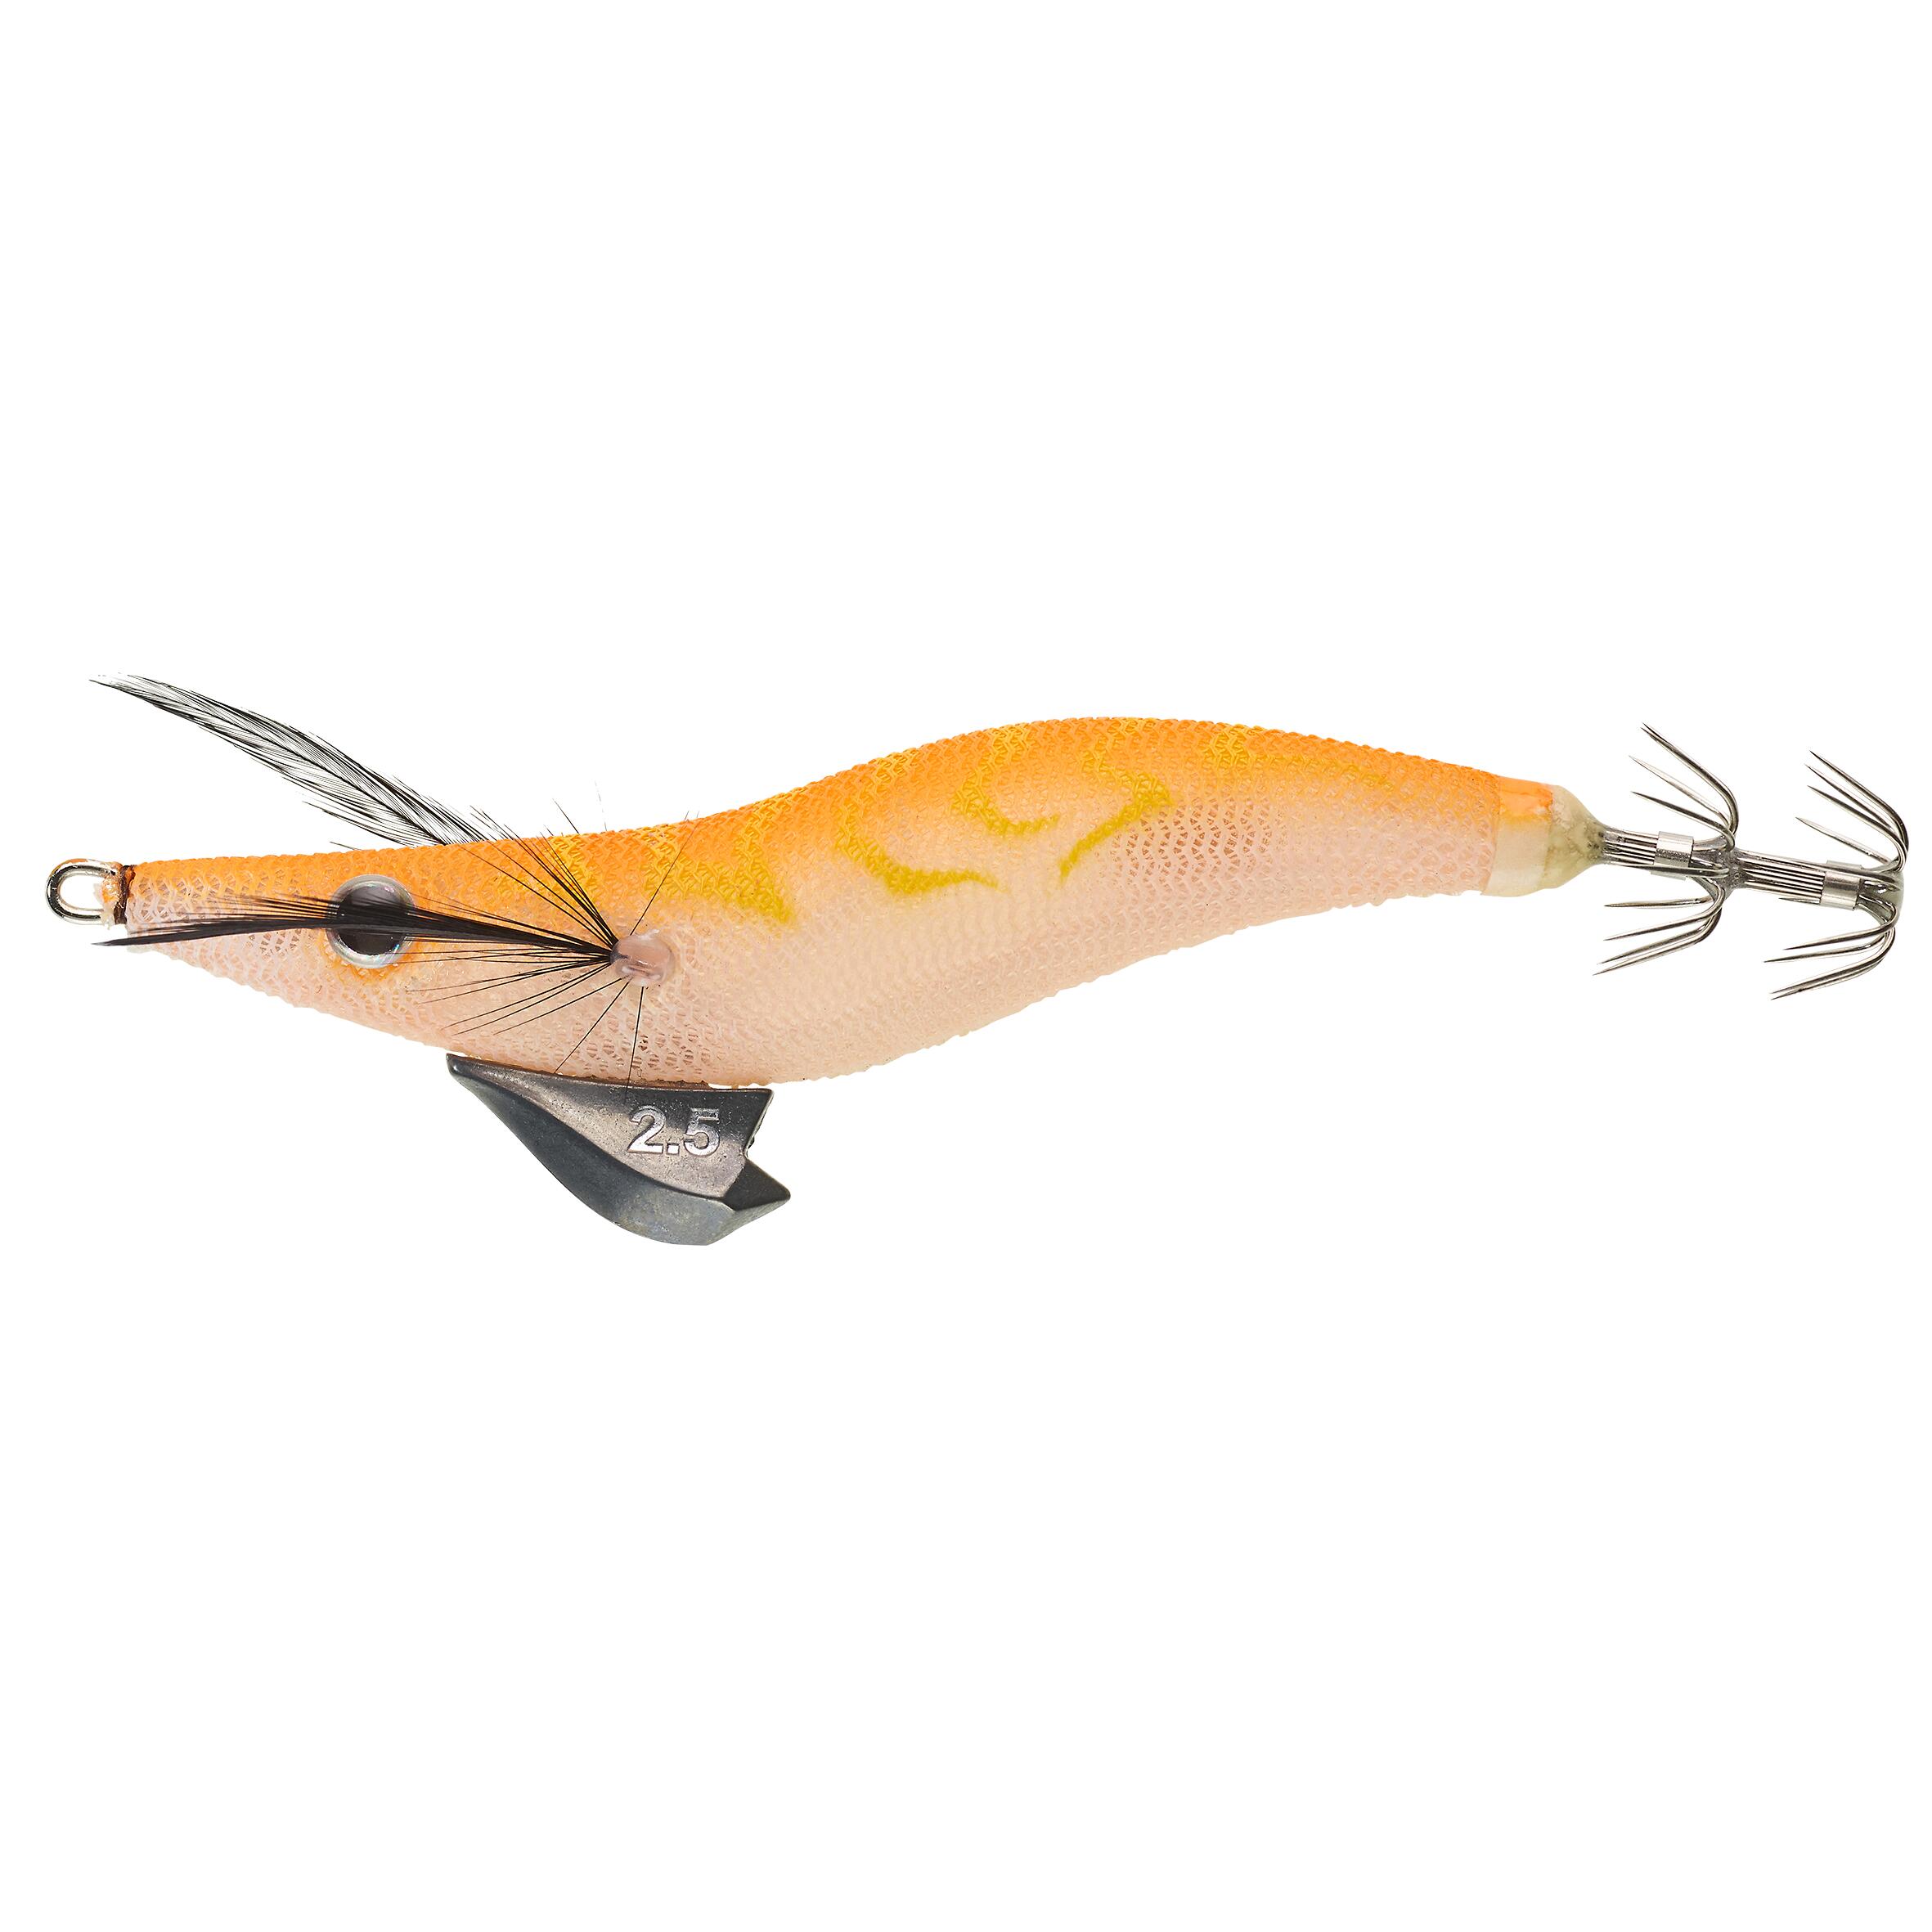 https://contents.mediadecathlon.com/p2395823/k$5b98f7758d2e3006eb010978cae78ca7/sea-fishing-for-cuttlefish-and-squid-sinking-jig-ebi-s-2-5-orange-caperlan-8789780.jpg